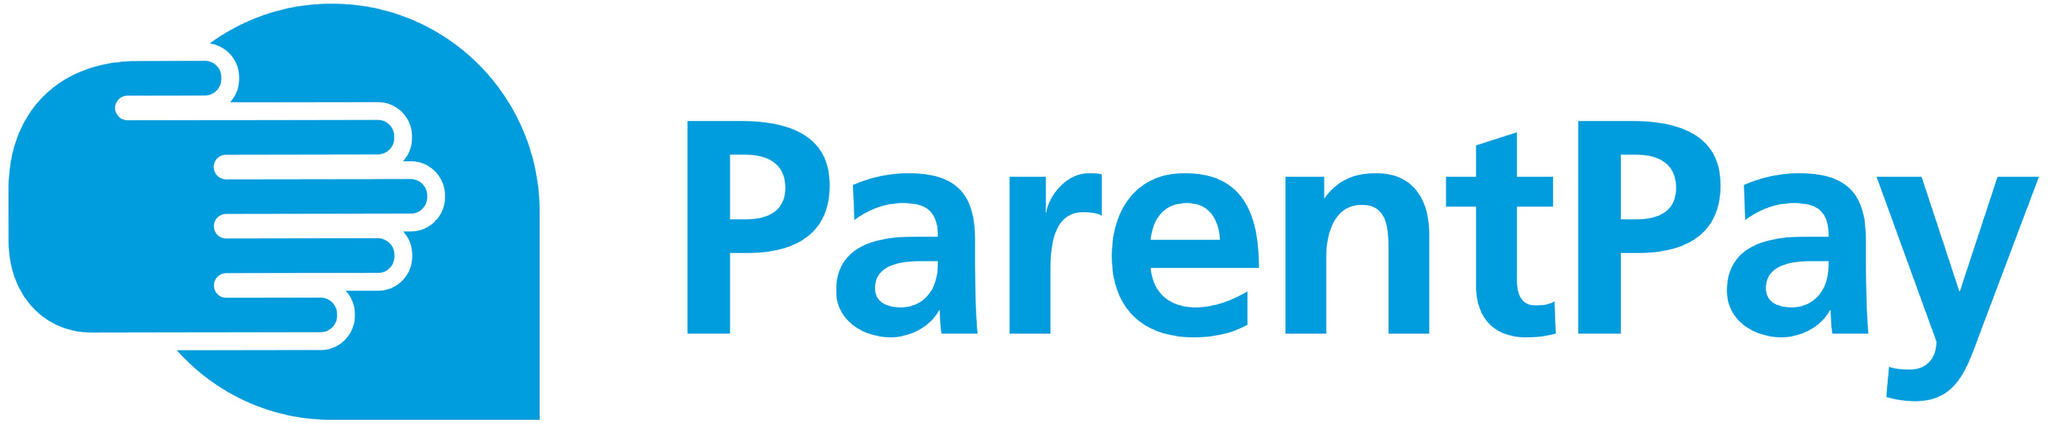 ParentPay